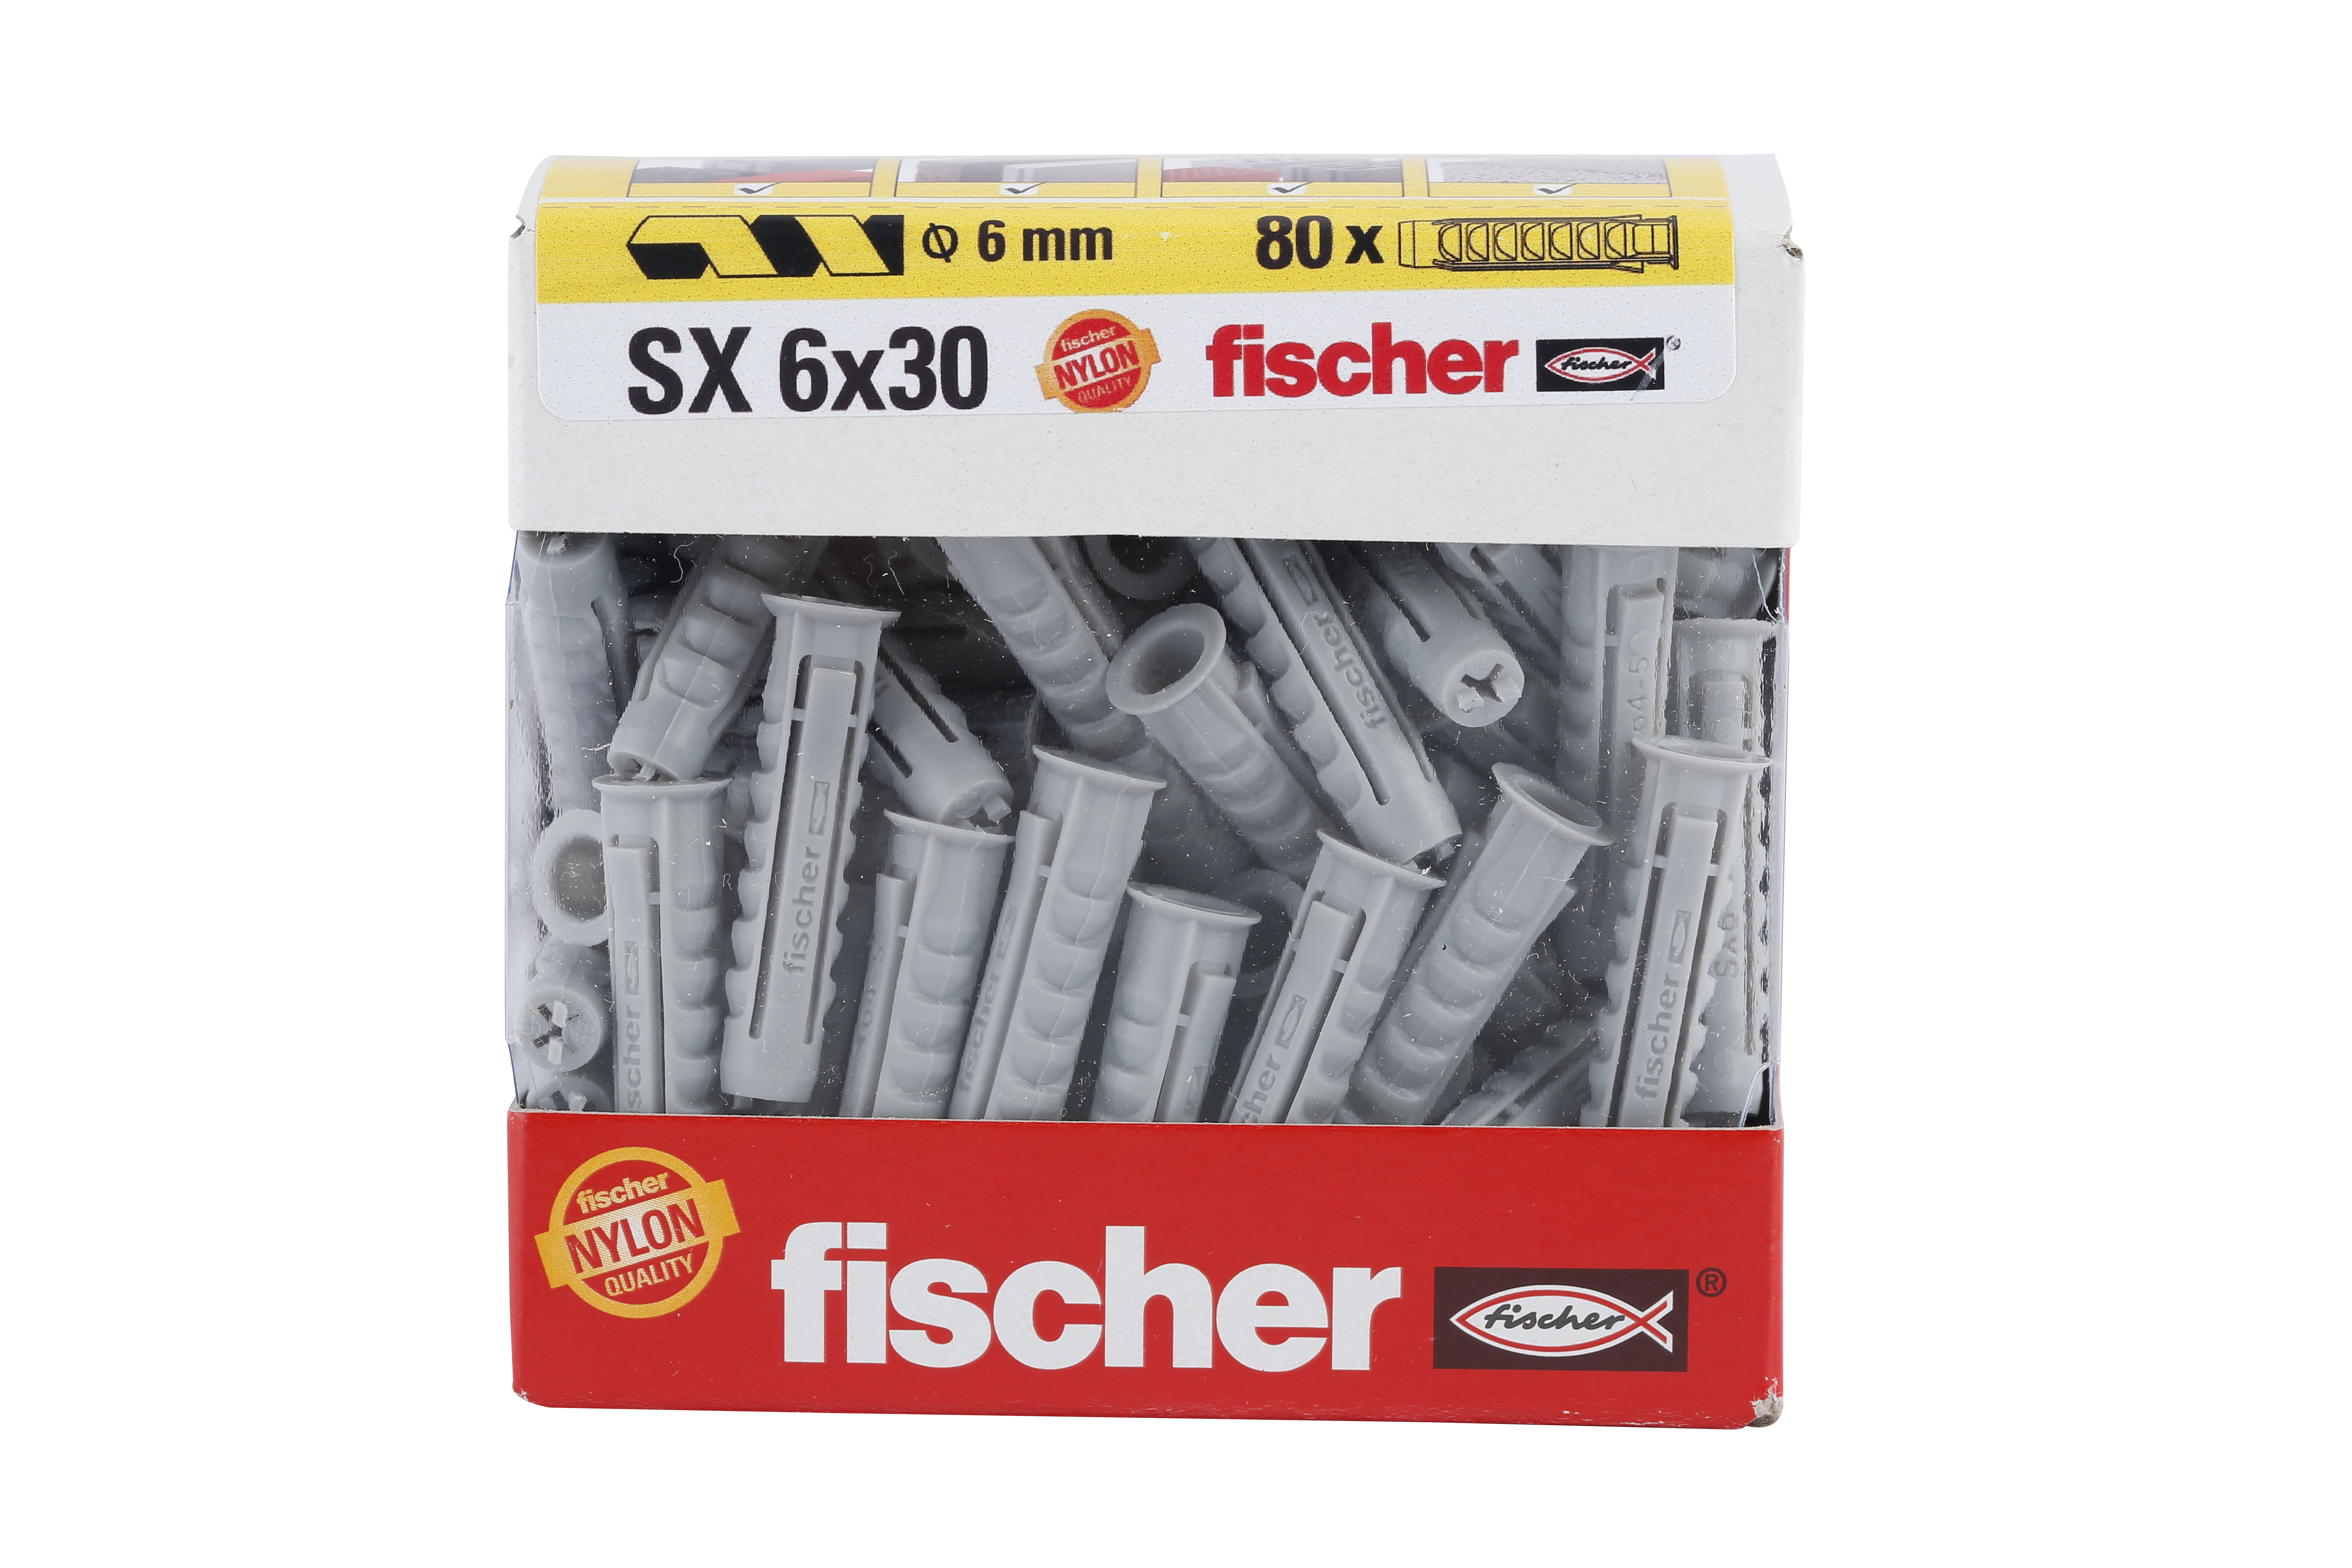 Tacos de nylon Fischer S 6, 100 unidades - 2.65€ con 32% descuento - Blog  de Chollos